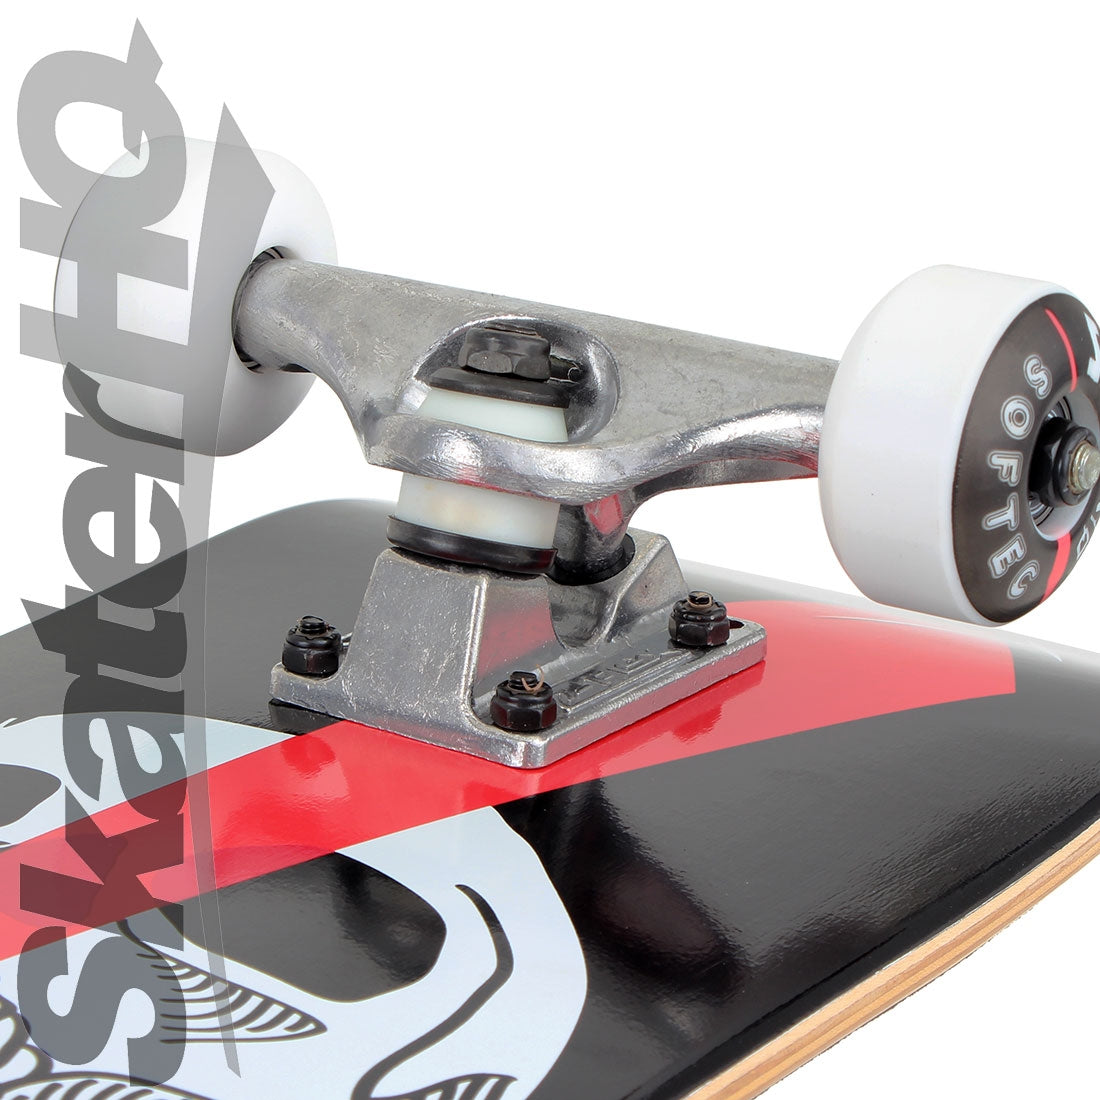 Skater HQ Skull and Swoosh 7.9 S Complete Skateboard Completes Modern Street